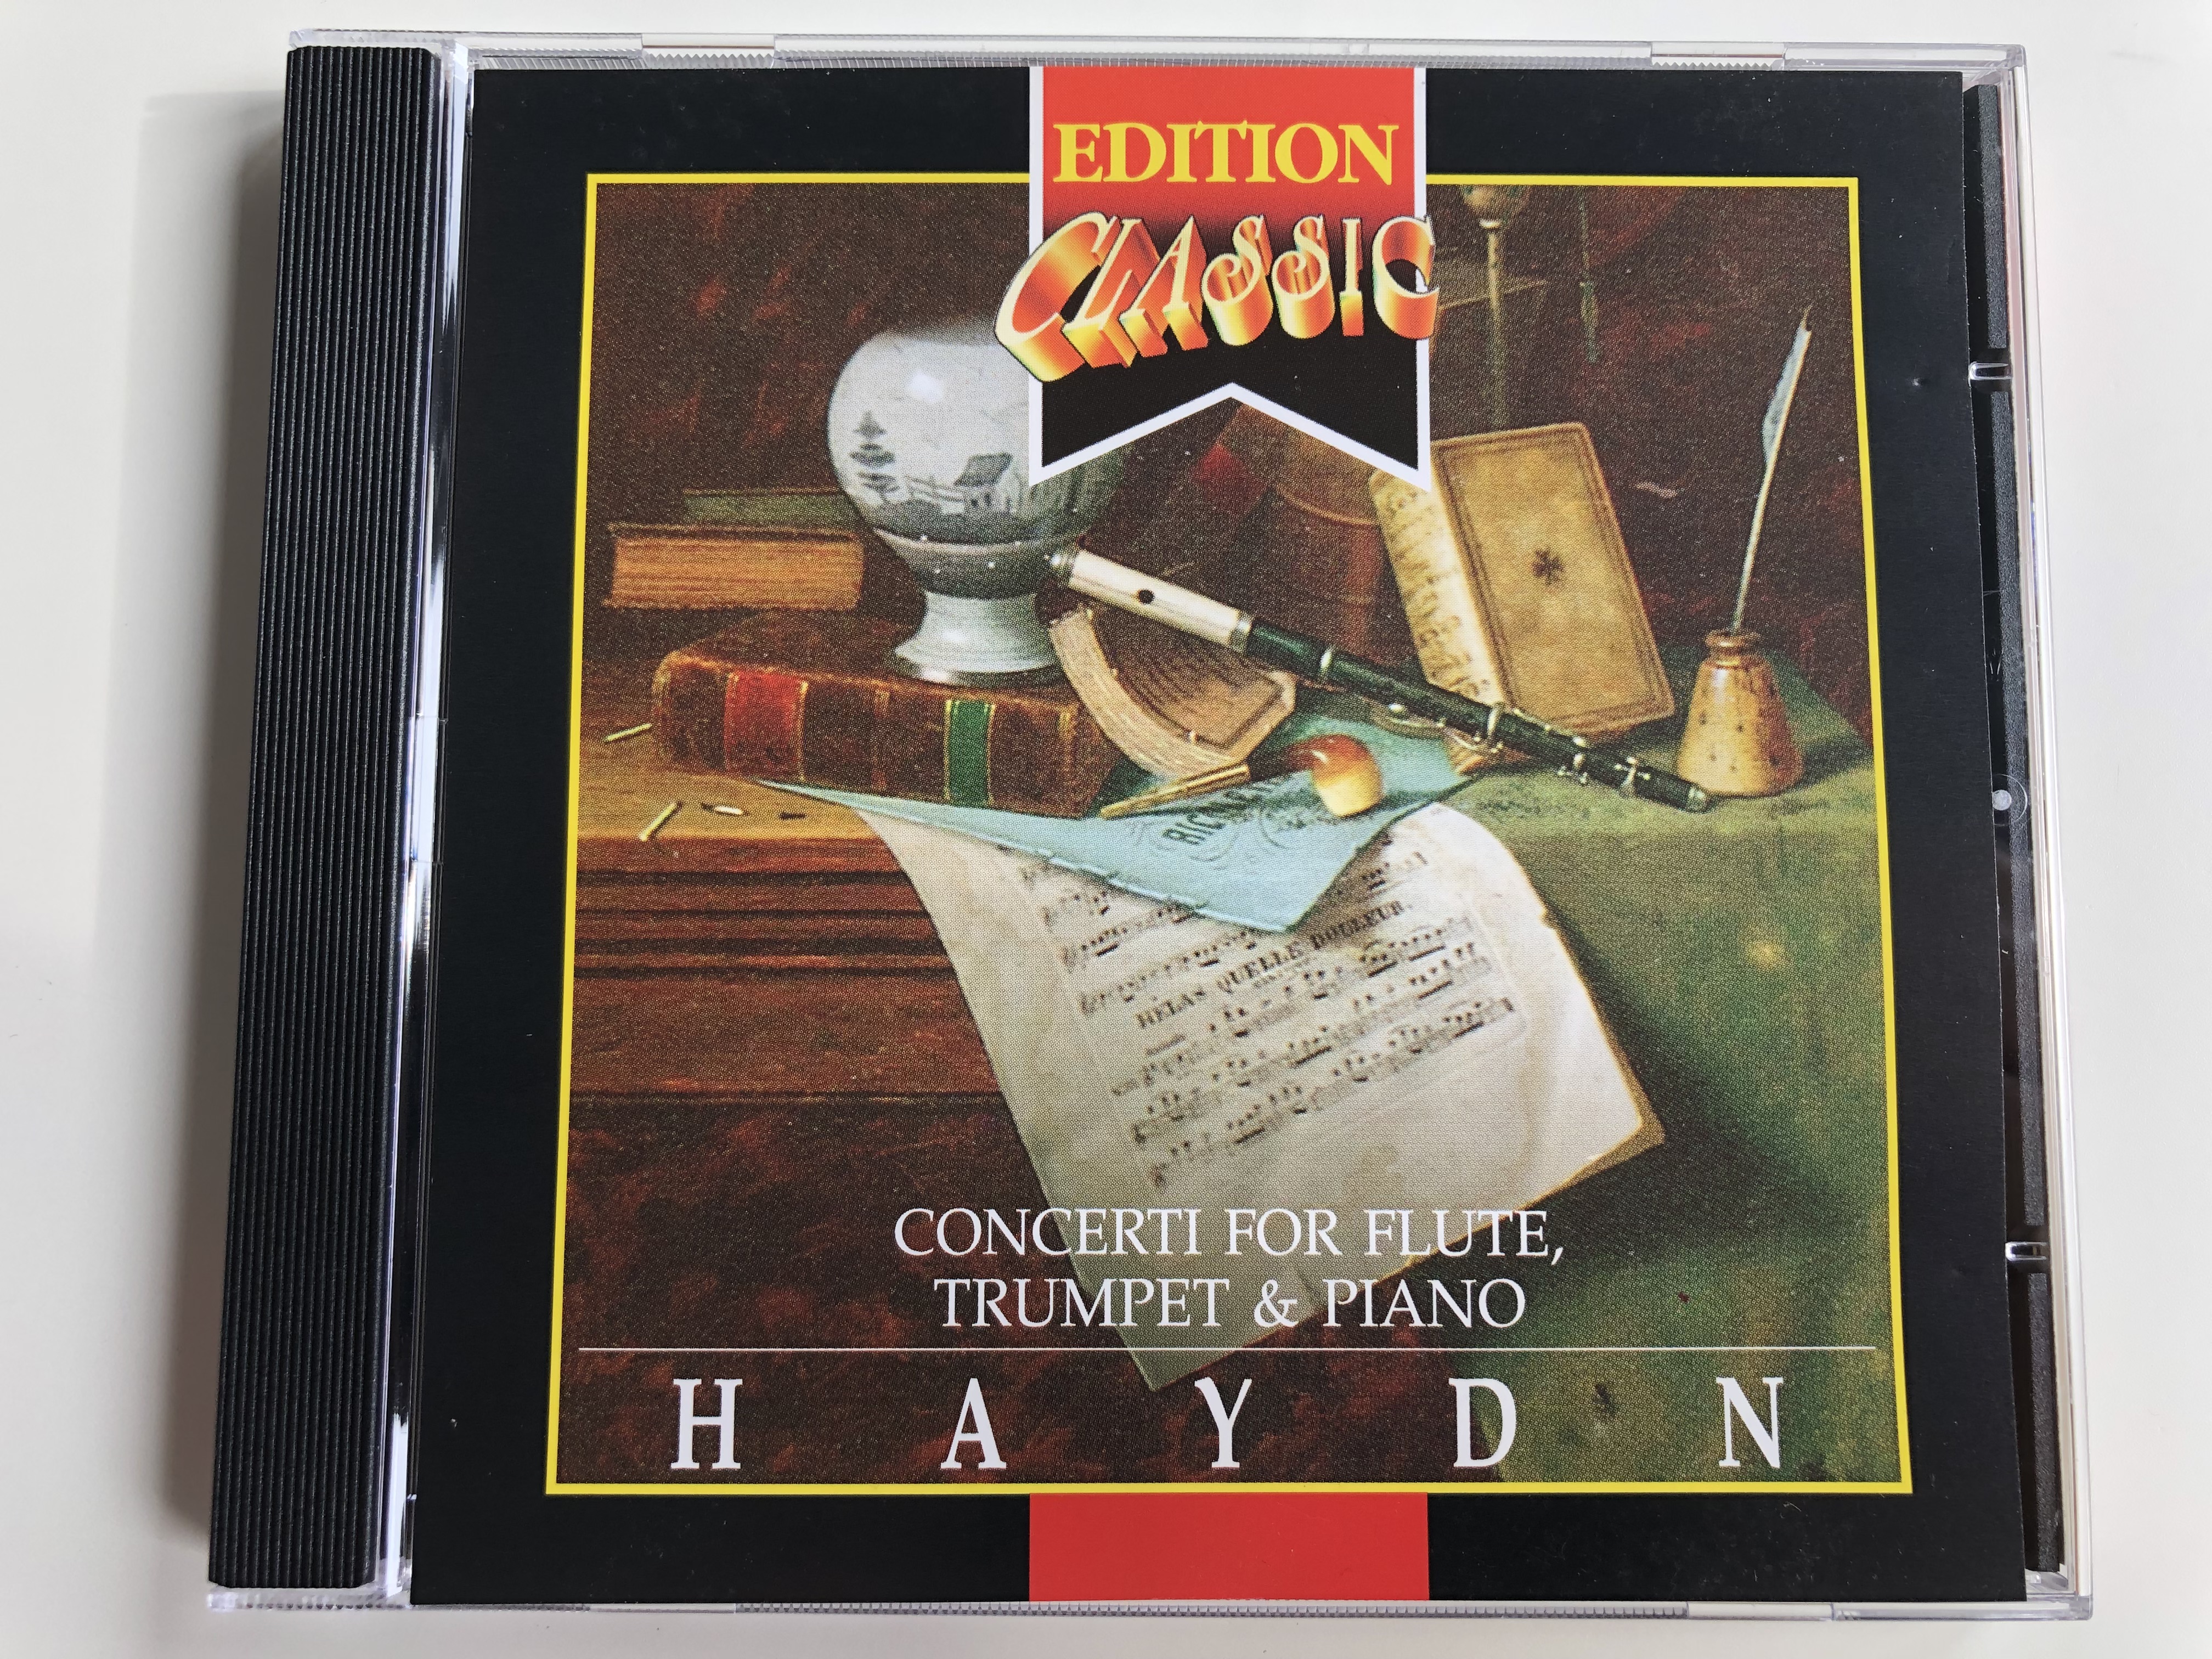 concerti-for-flute-trumpet-piano-haydn-edition-classic-audio-cd-1995-ec-1269-1-.jpg